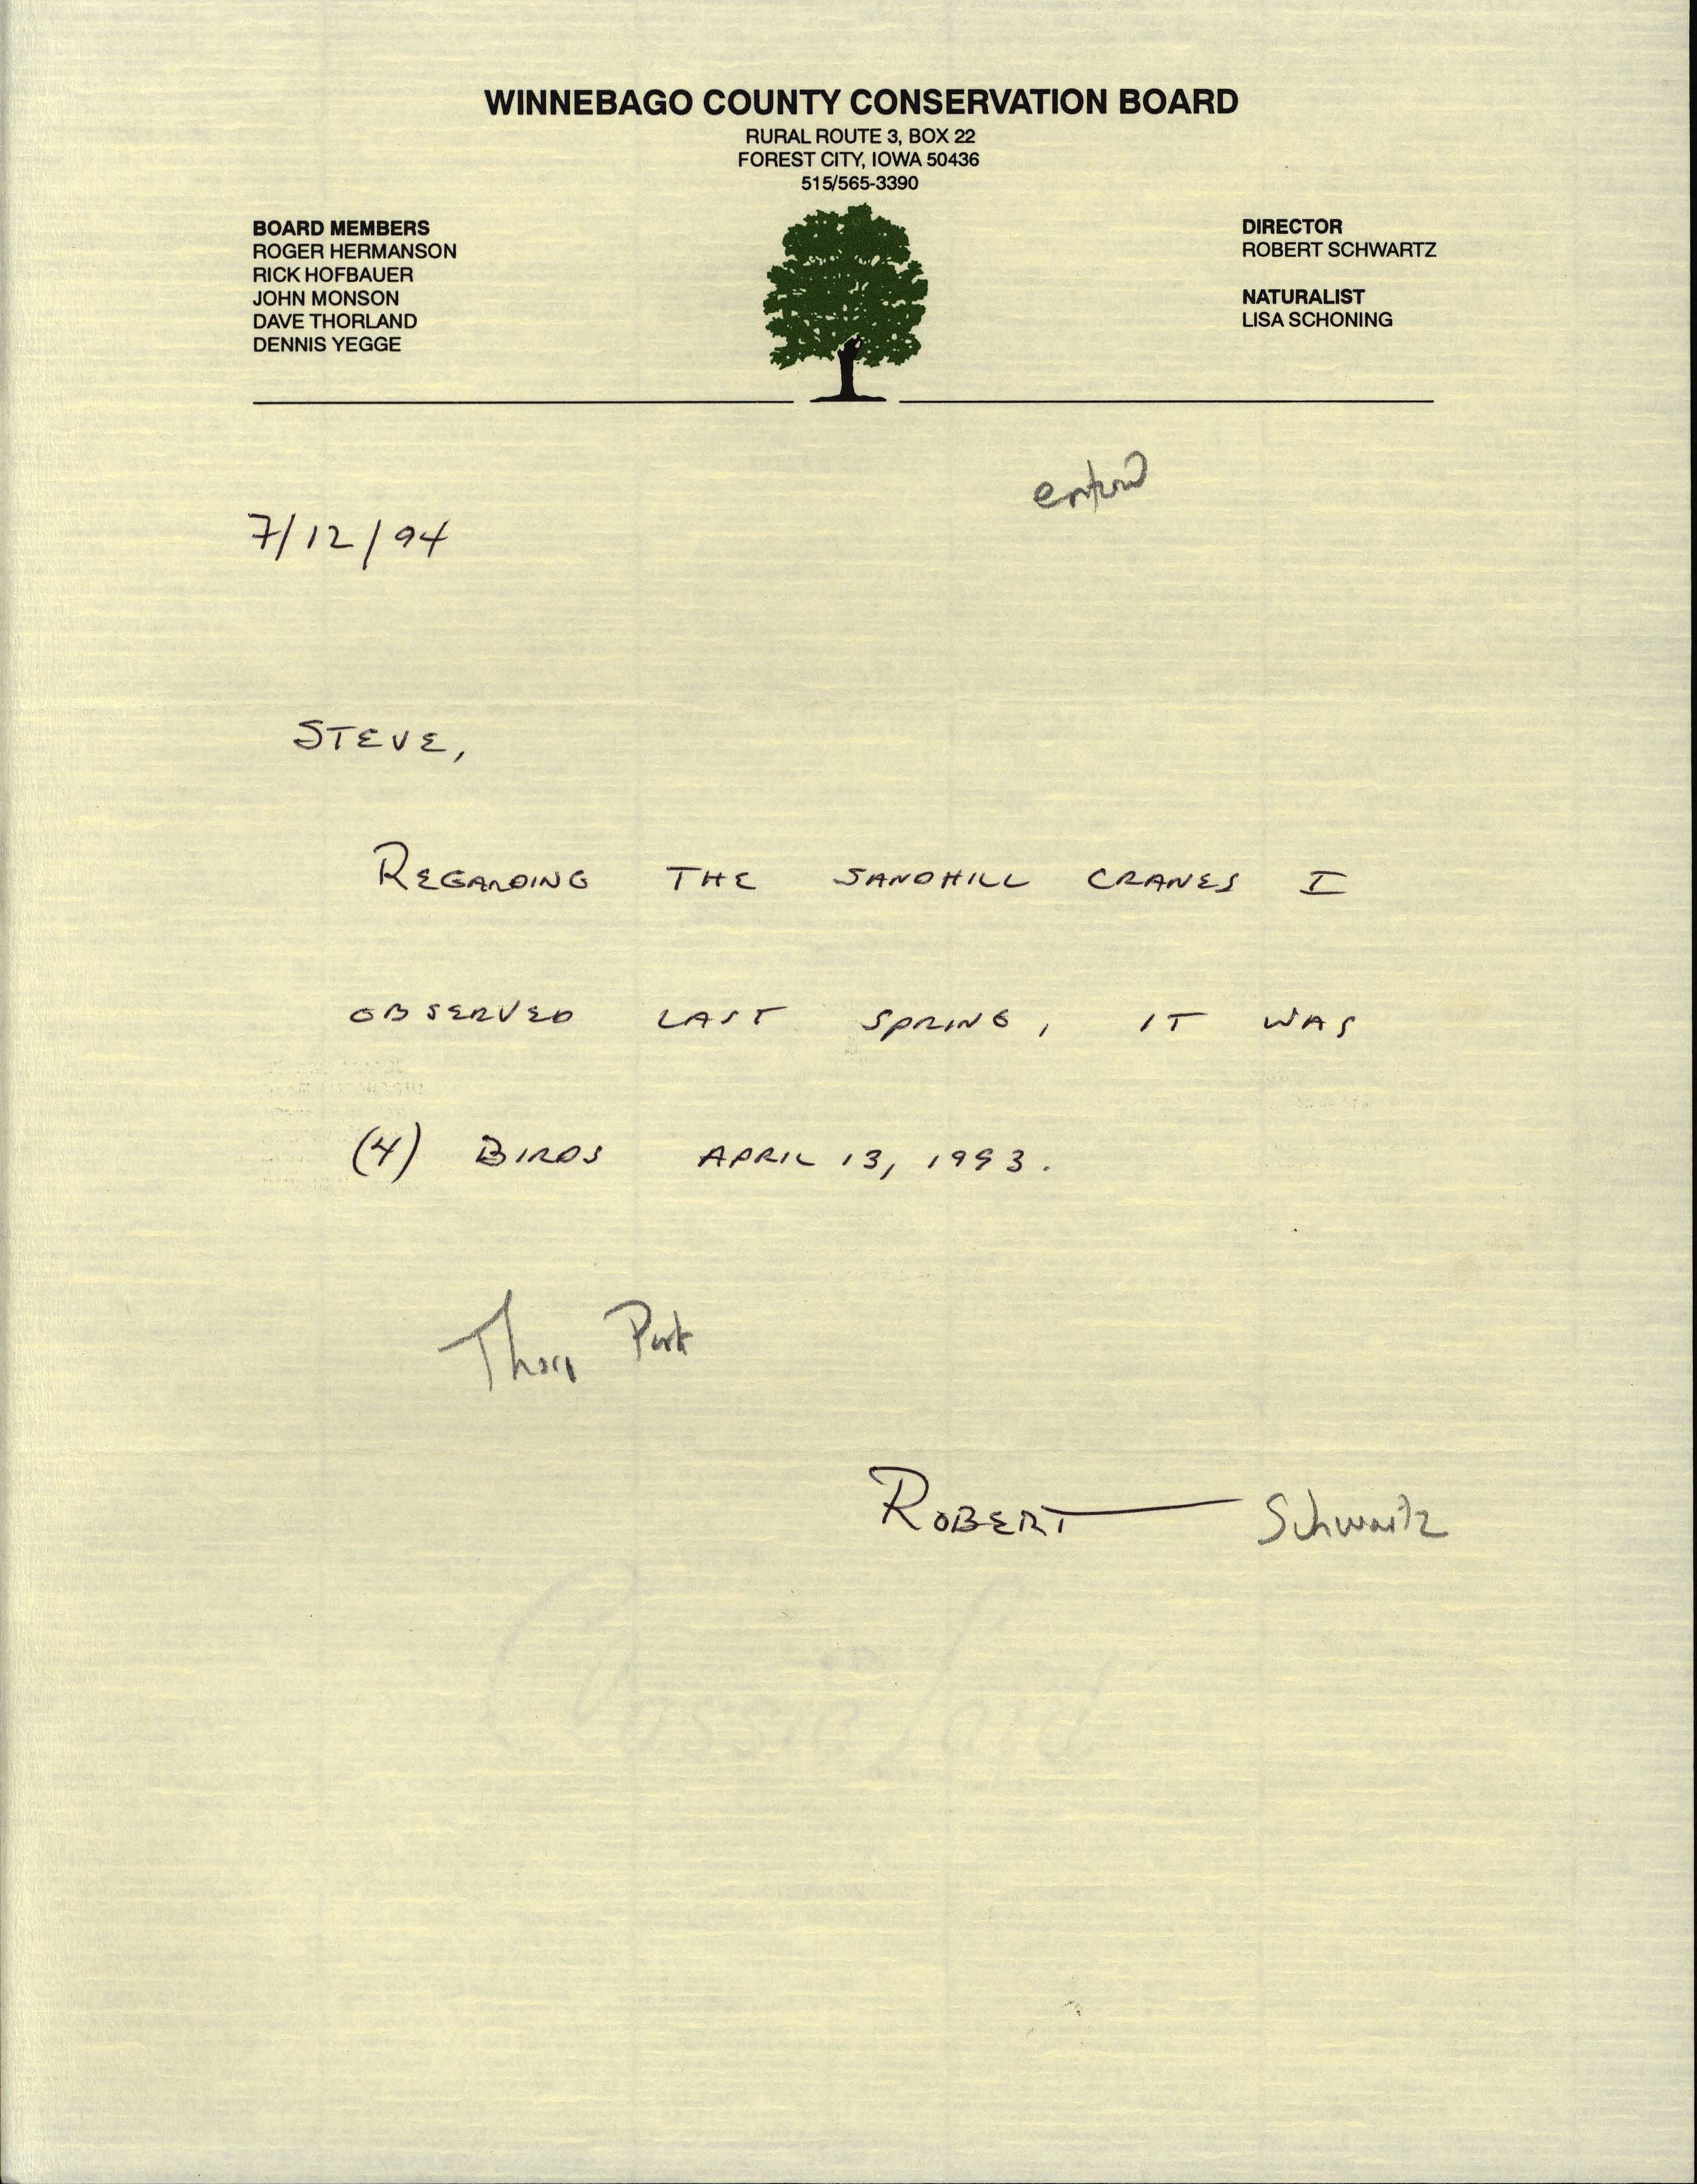 Robert Schwartz letter to Steve Dinsmore regarding Spring 1993 Sandhill Crane sighting, July 12, 1994